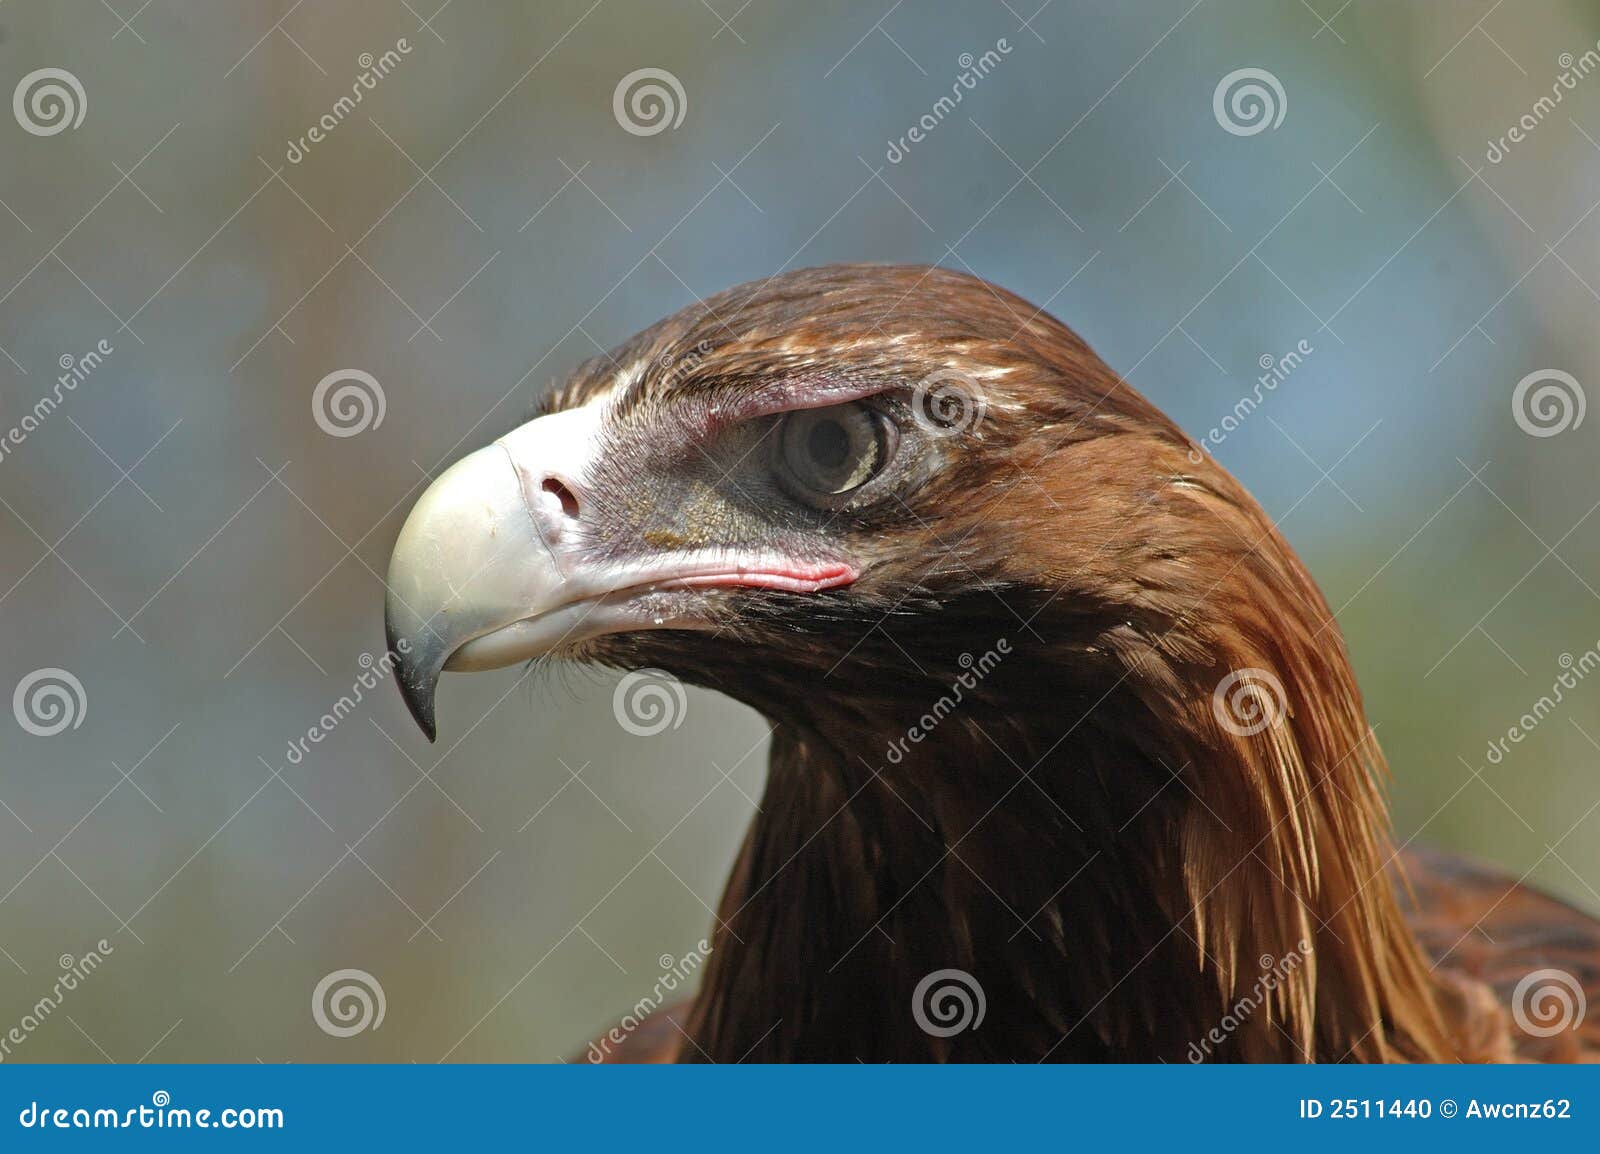 wedge-tailed eagle